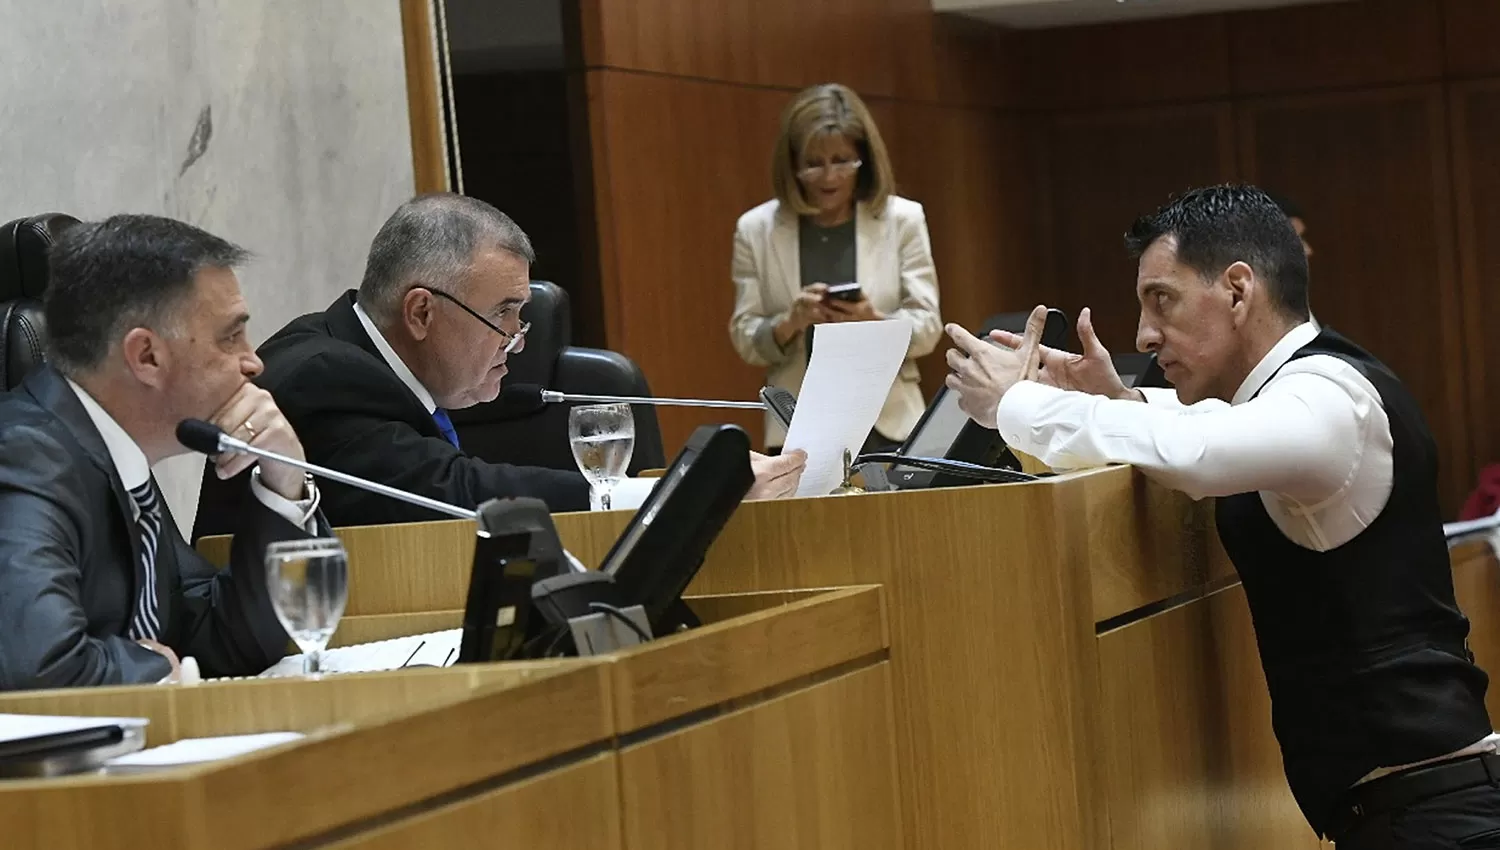 EN SESIÓN. Vargas Aignasse dialoga con Jaldo, en un debate legislativo. FOTO PRENSA DE LA LEGISLATURA